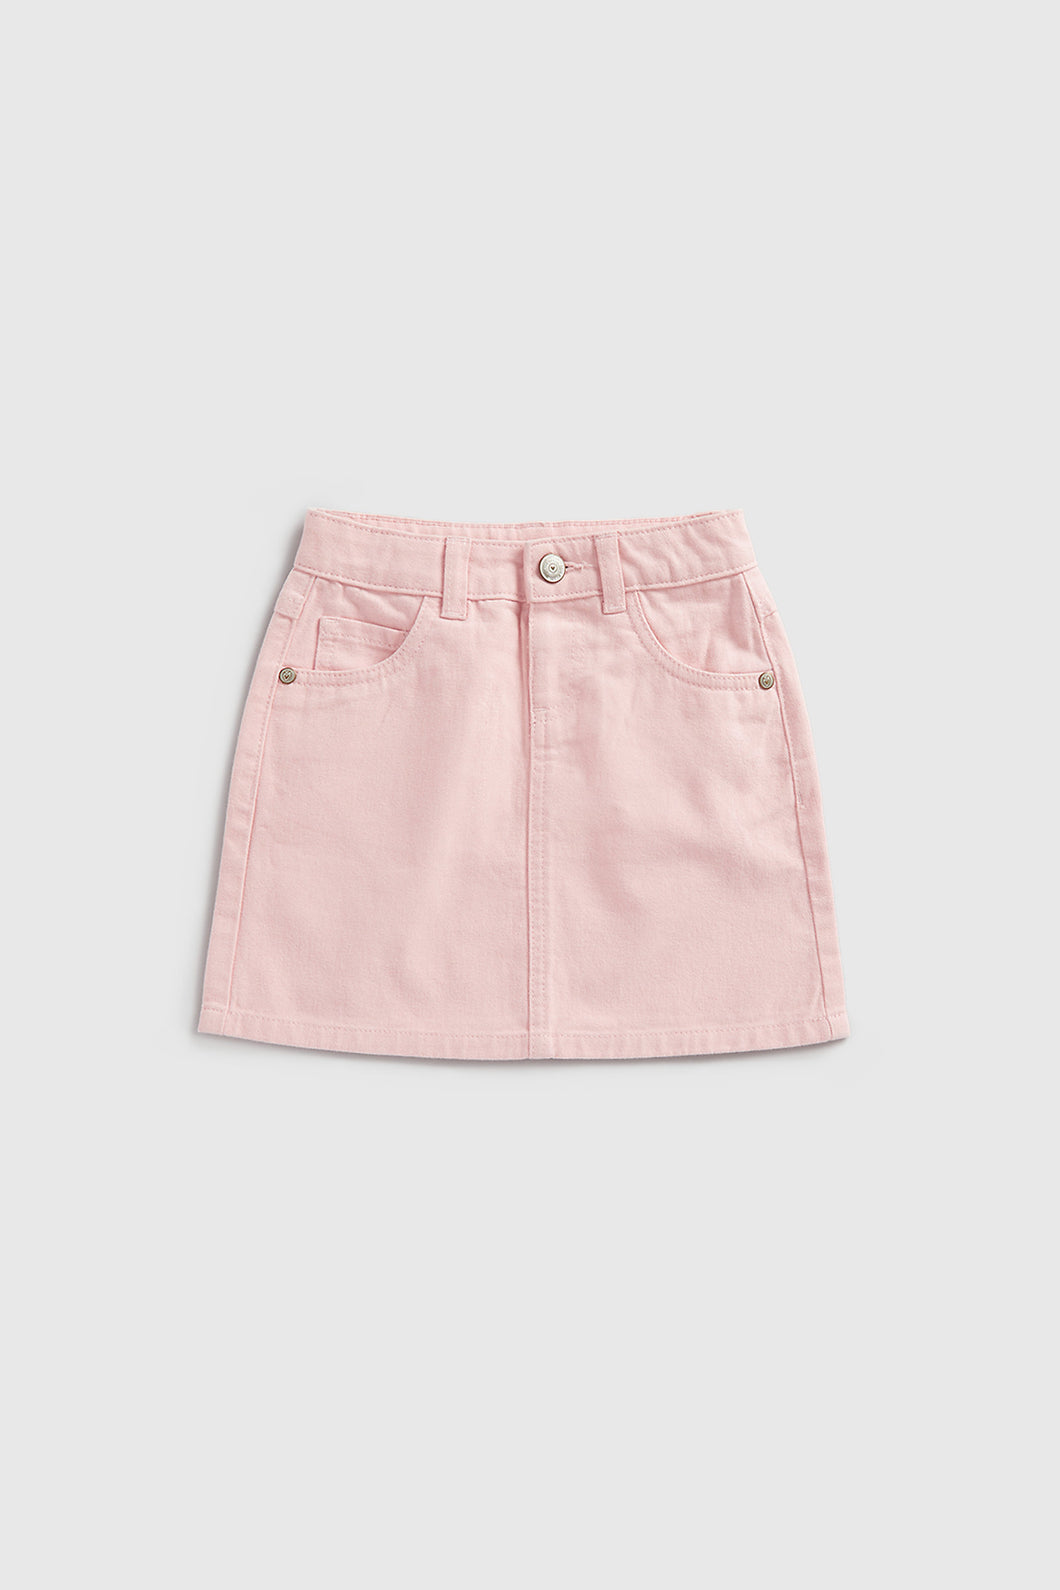 Mothercare Pink Denim Skirt